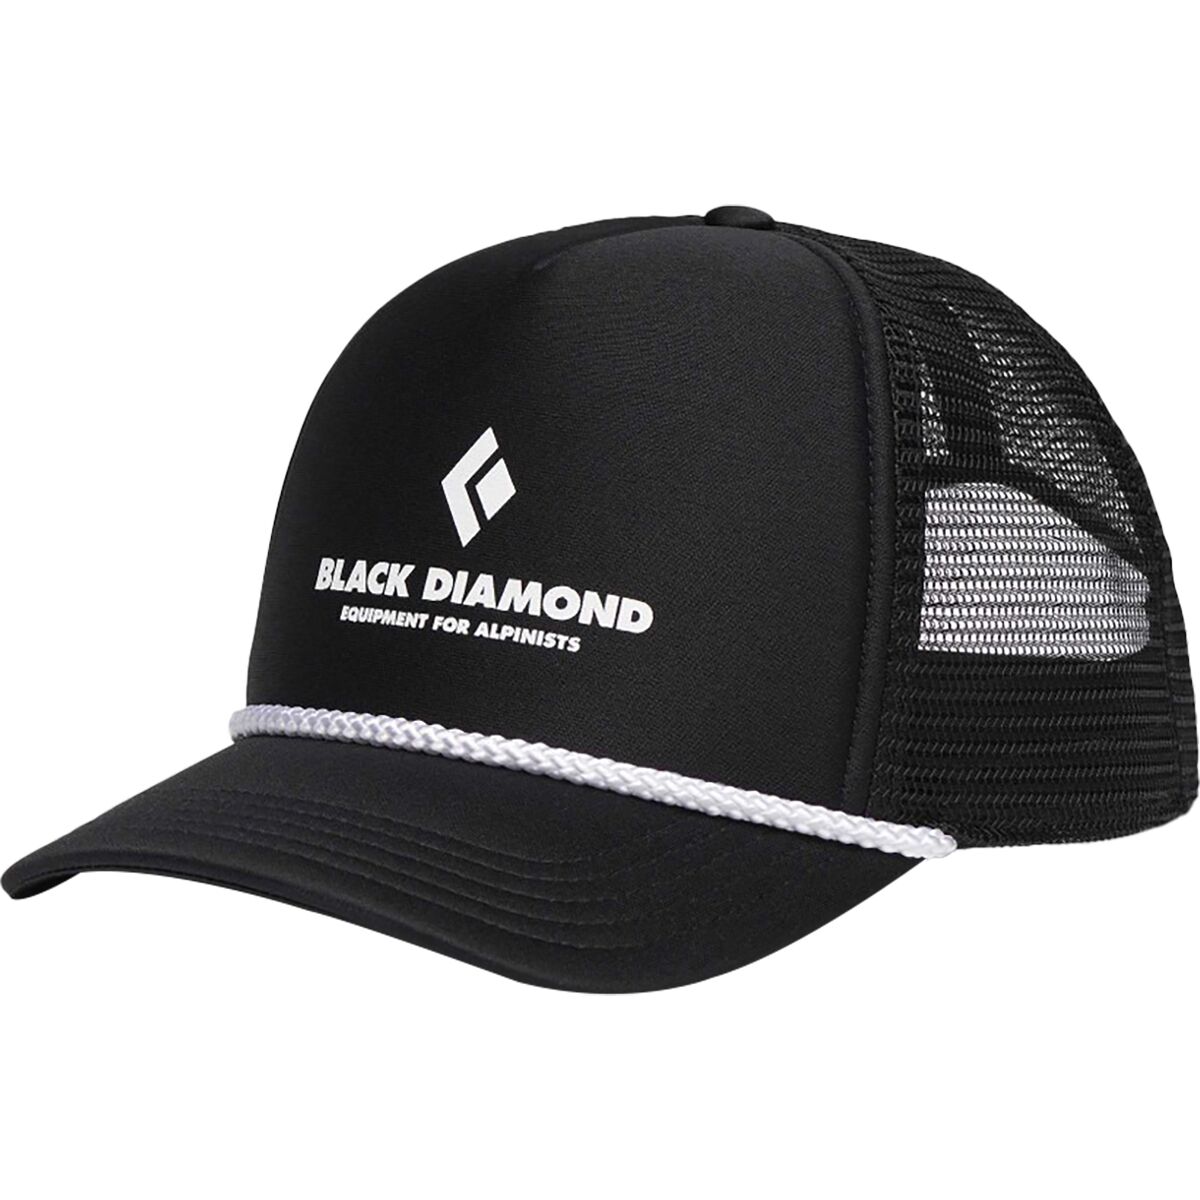 Кепка дальнобойщика с плоским козырьком Black Diamond, цвет black/black eqpmnt for alpnst fashion soft flag of kuwait heart hat gift dad hat trucker hat cowboy hat